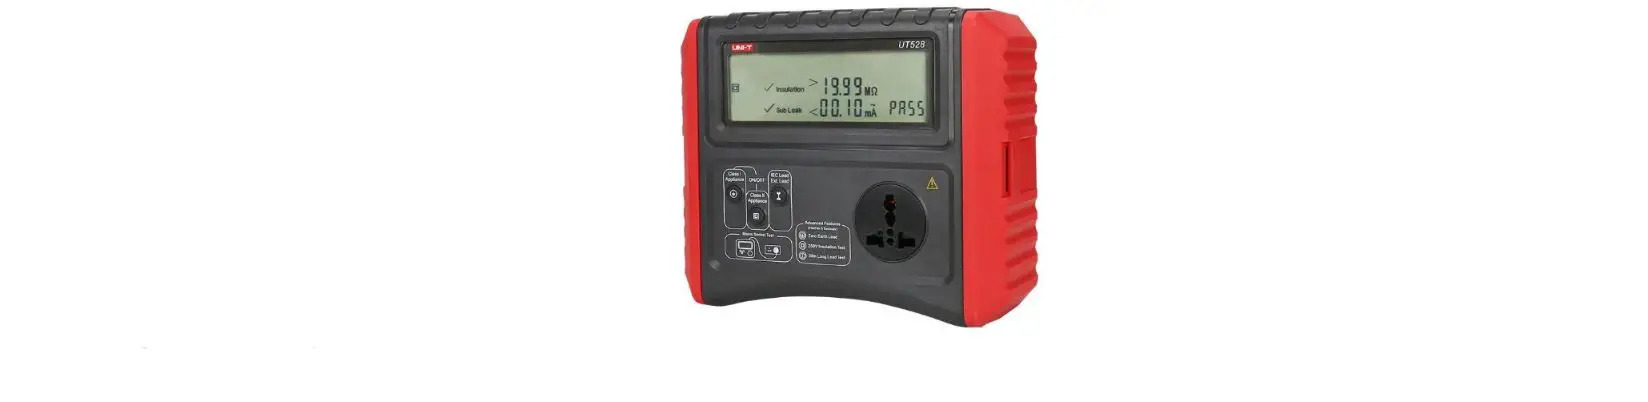 UT528 Electrical Tester